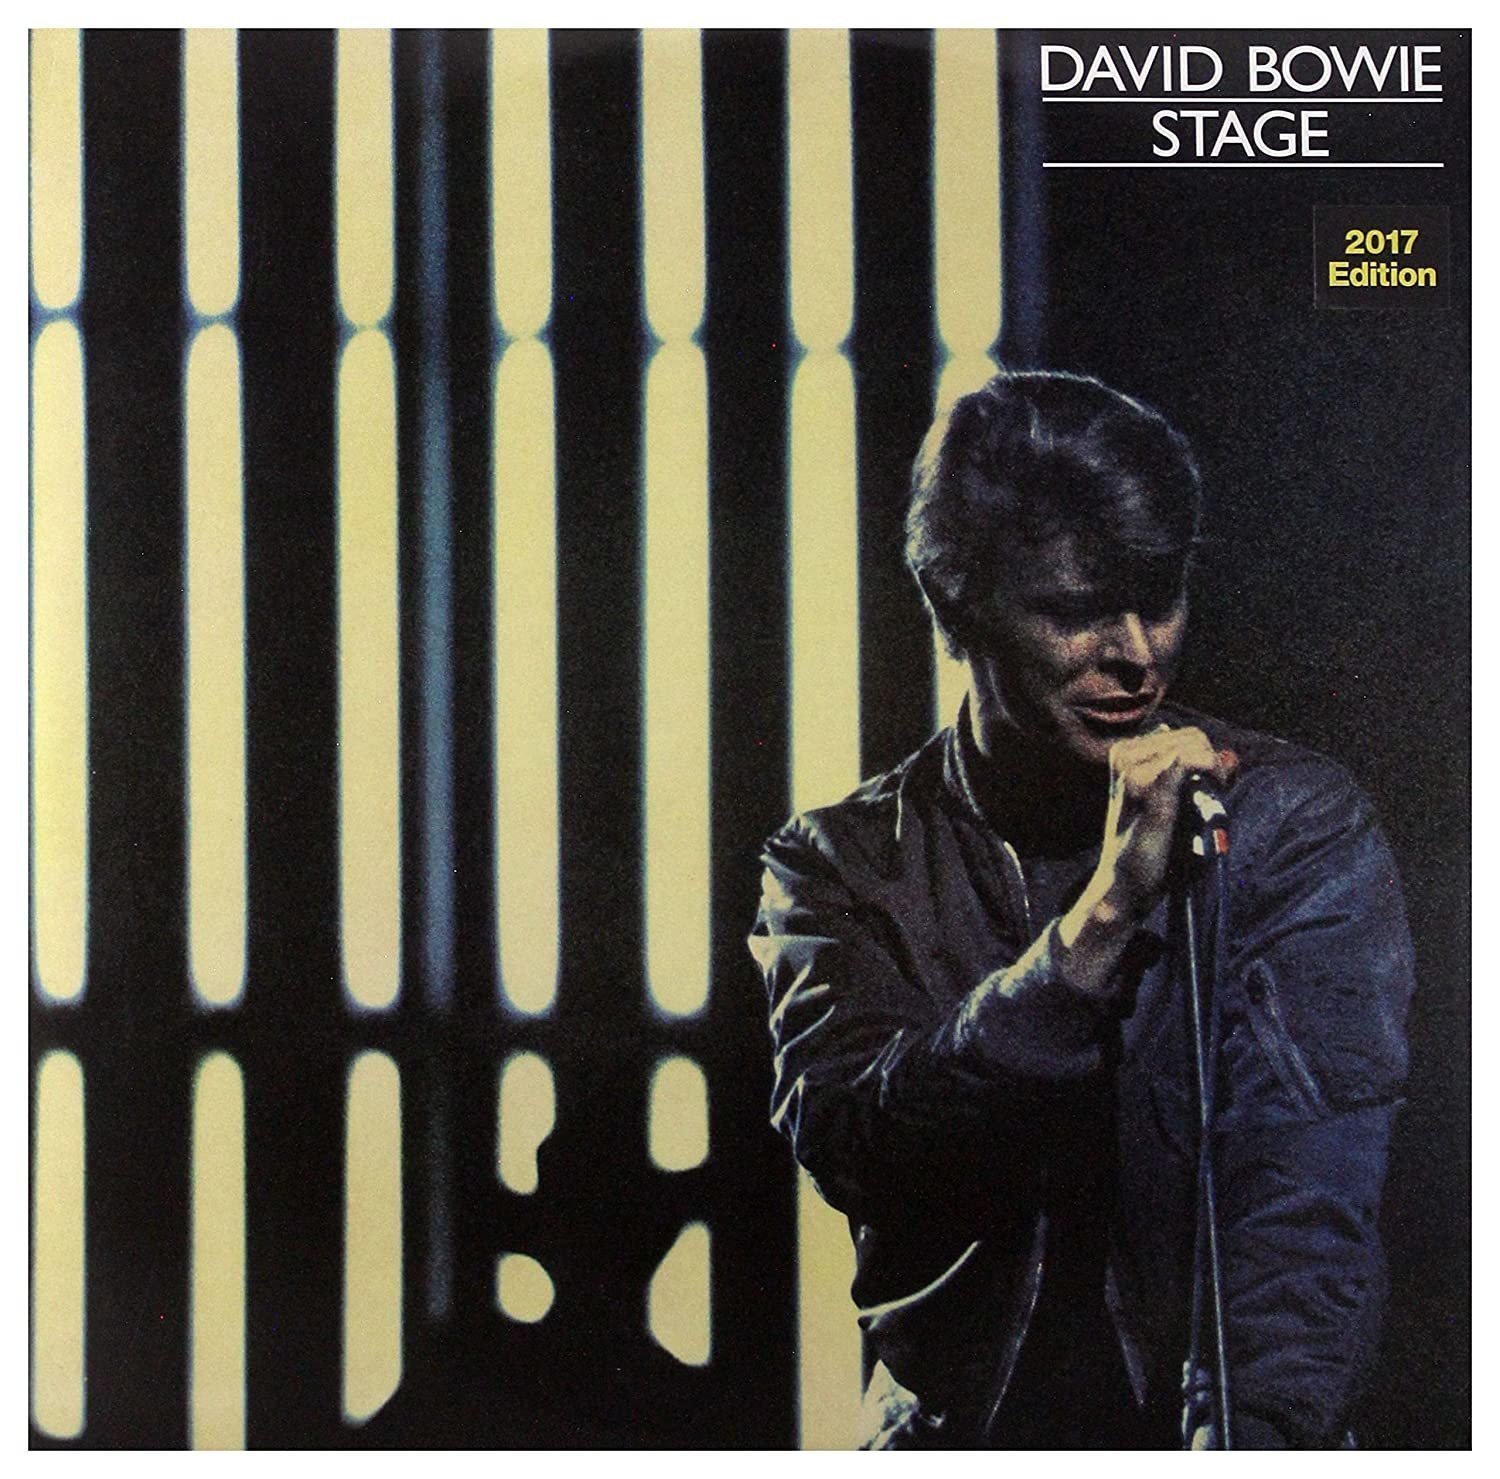 Vinyl Record David Bowie - Stage (2017 - Live) (3 LP)